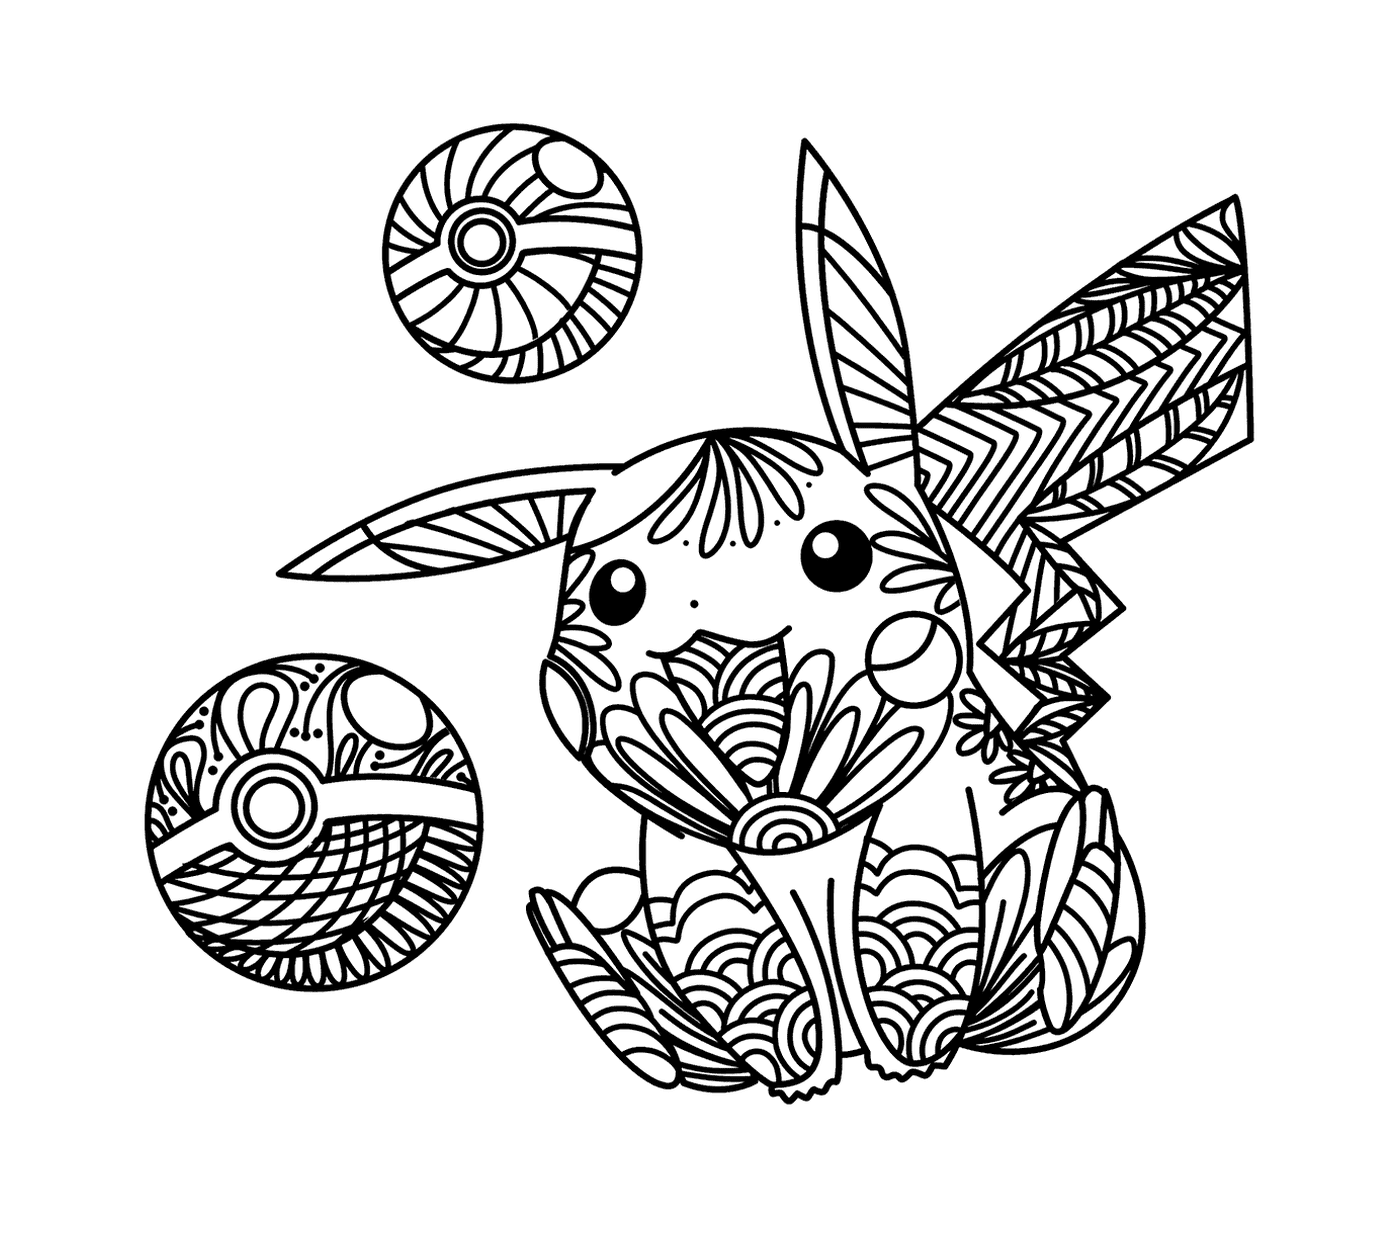 Zen Pikachu mandala